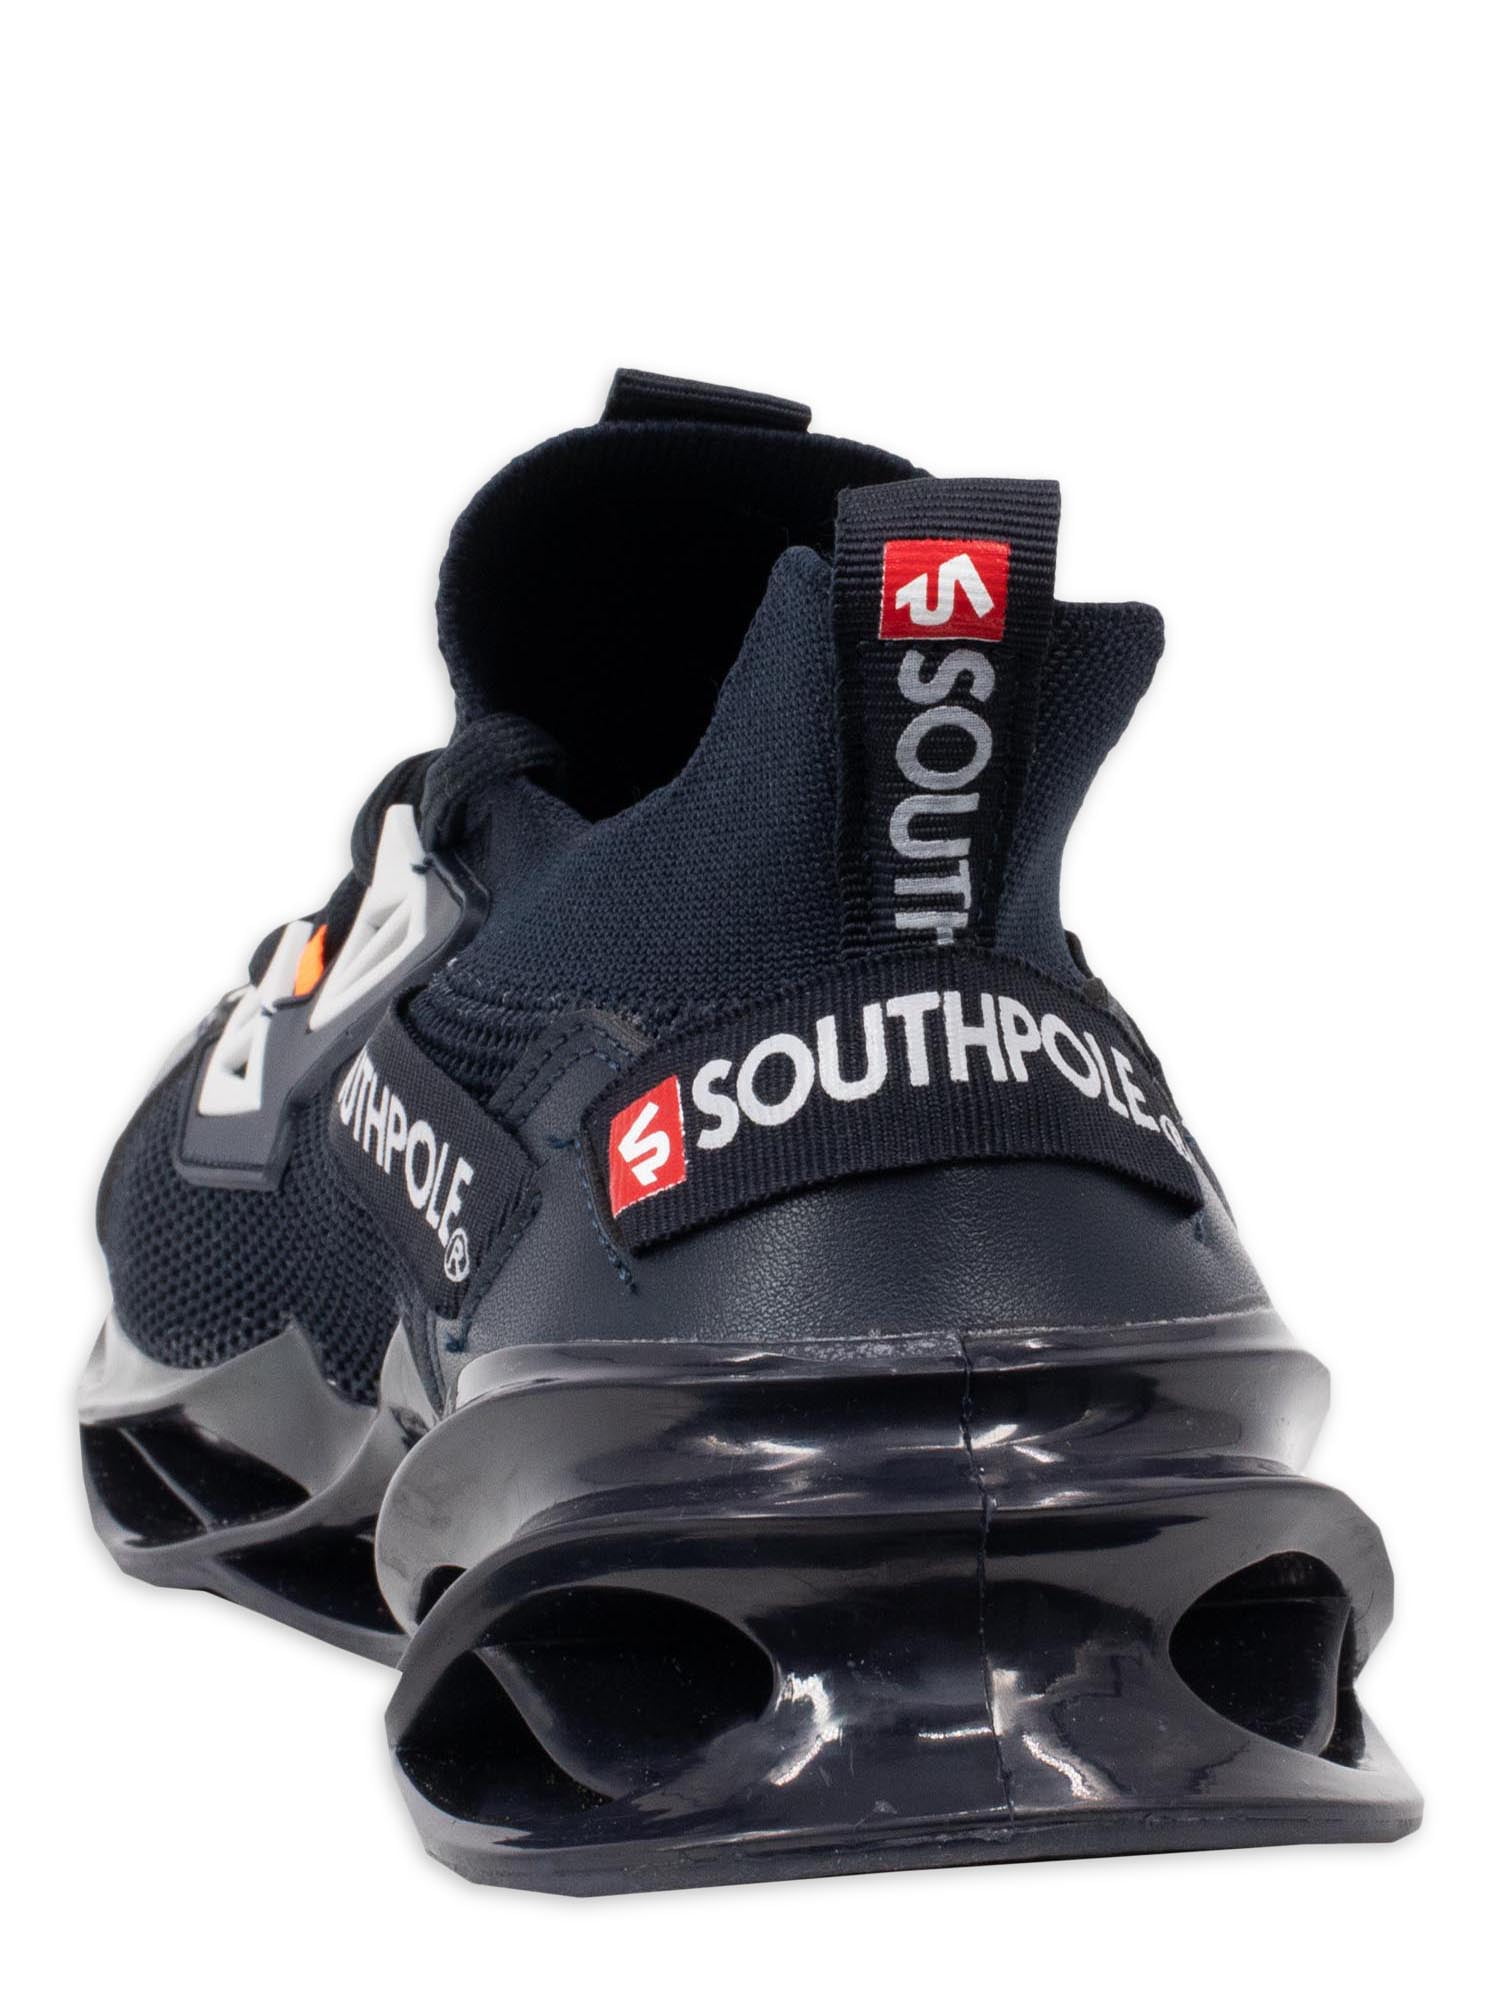 South Pole | Shoes | New Southpole Sneakers | Poshmark